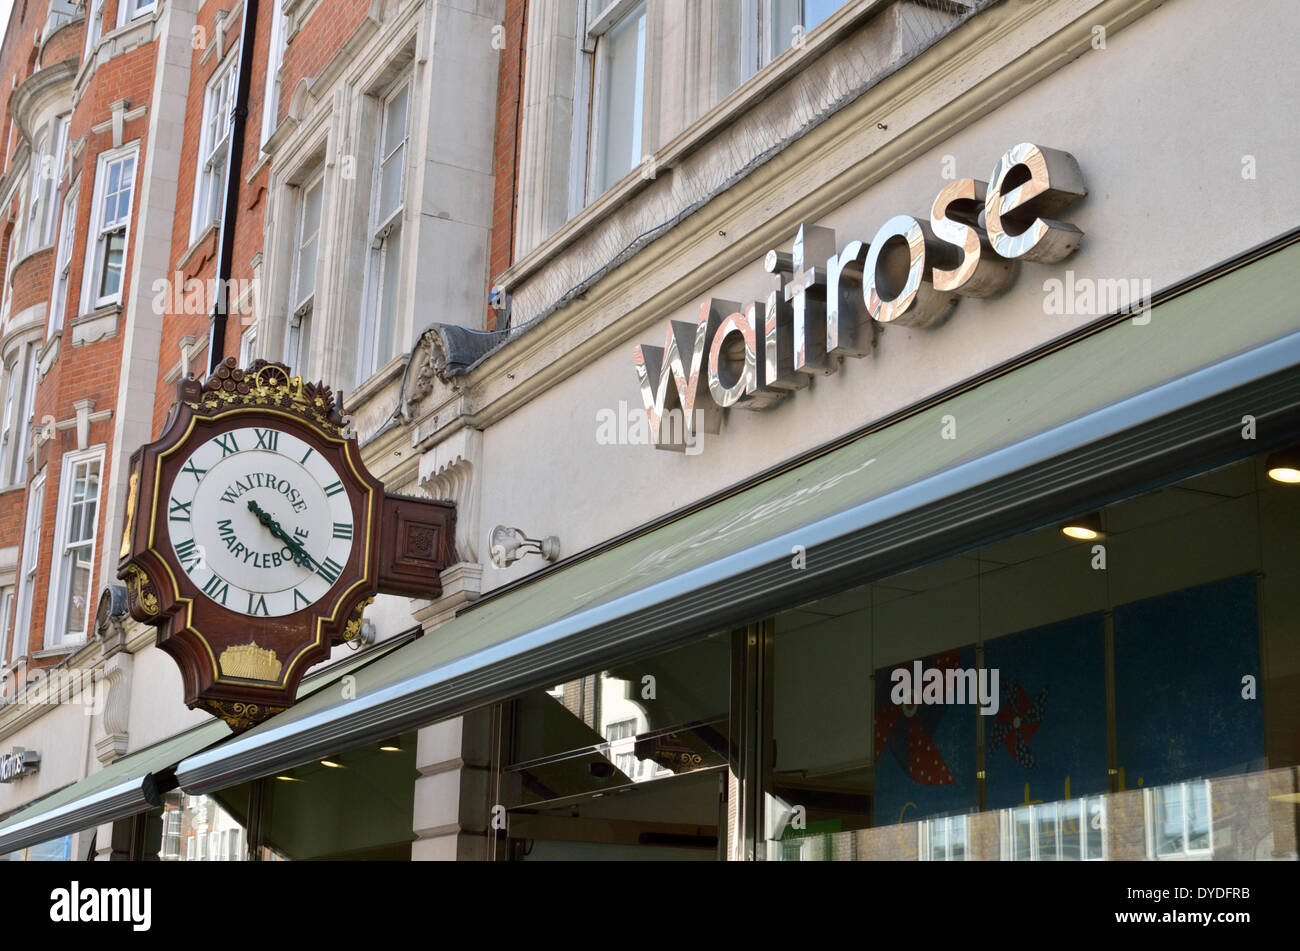 Waitrose Supermarket in Marylebone High Street. Stock Photo